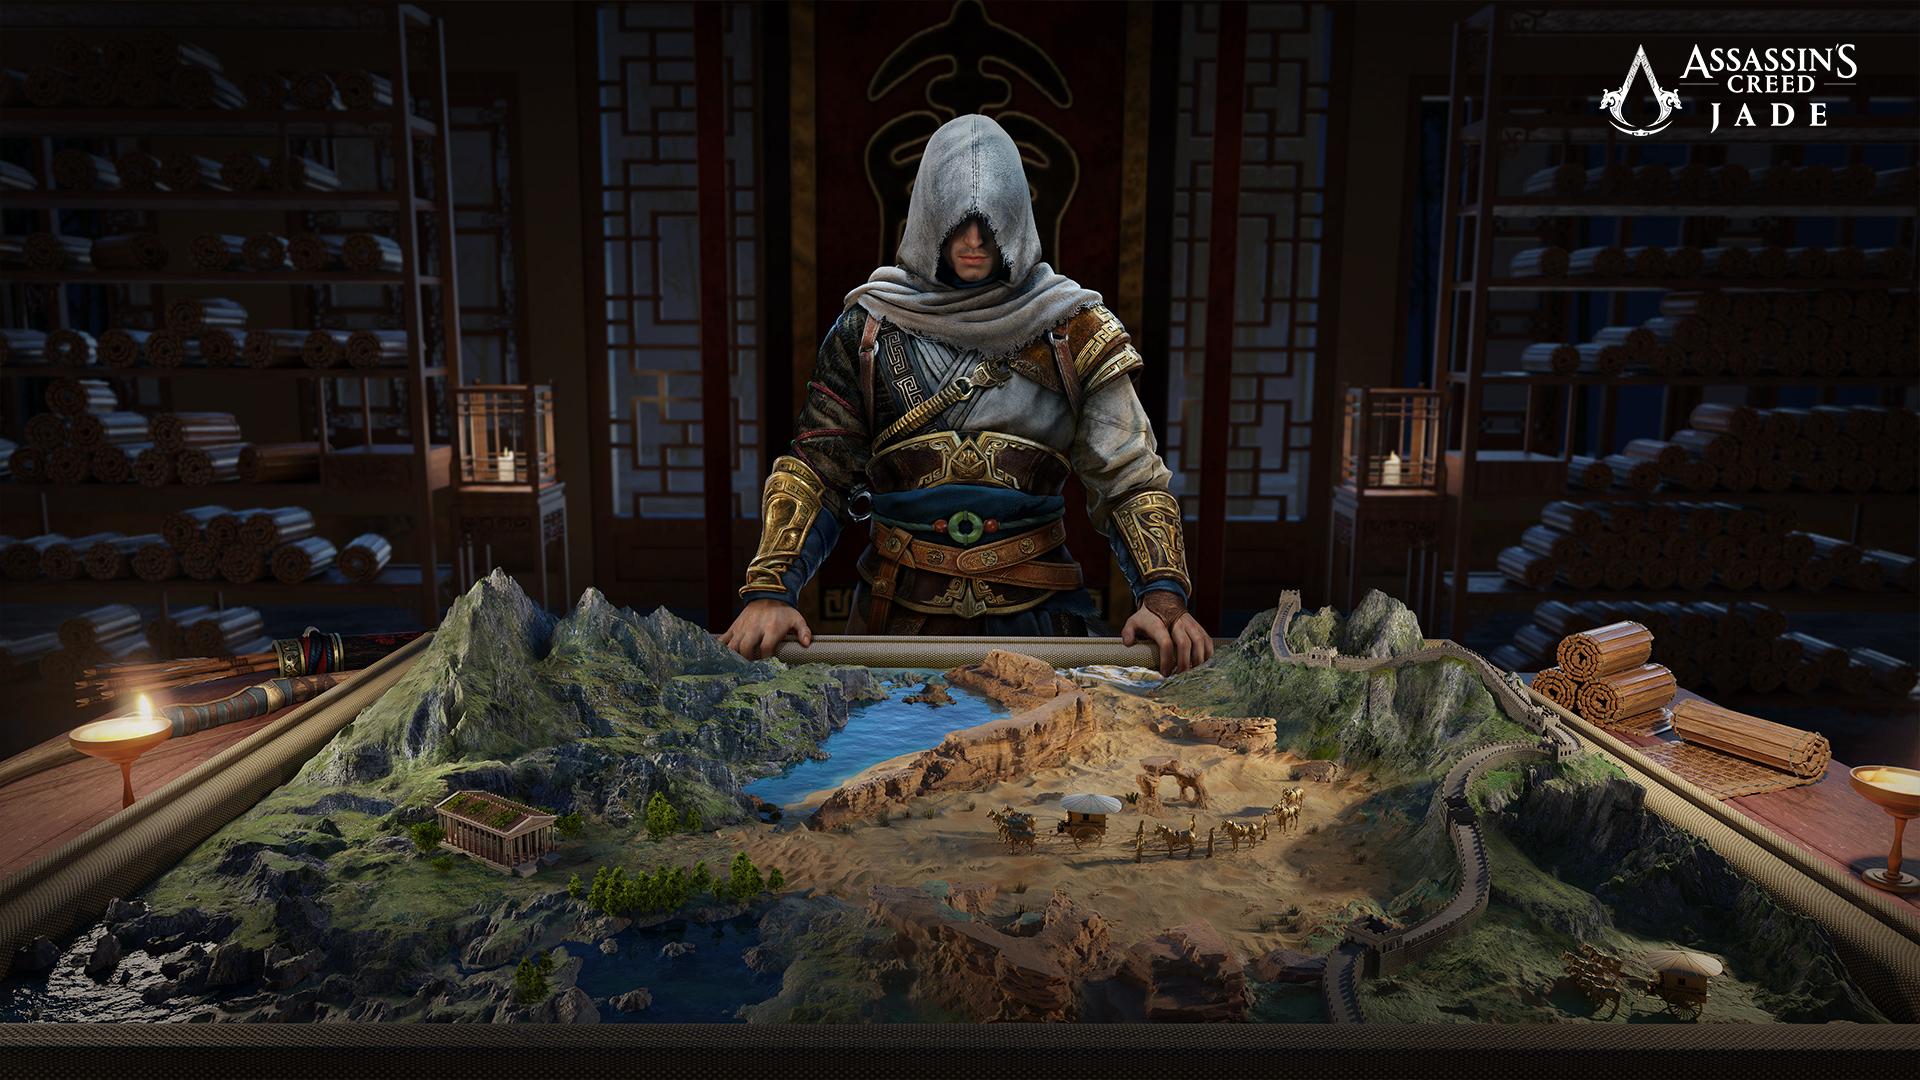 Oficiálny obrázok z hry Assassin's Creed Jade.